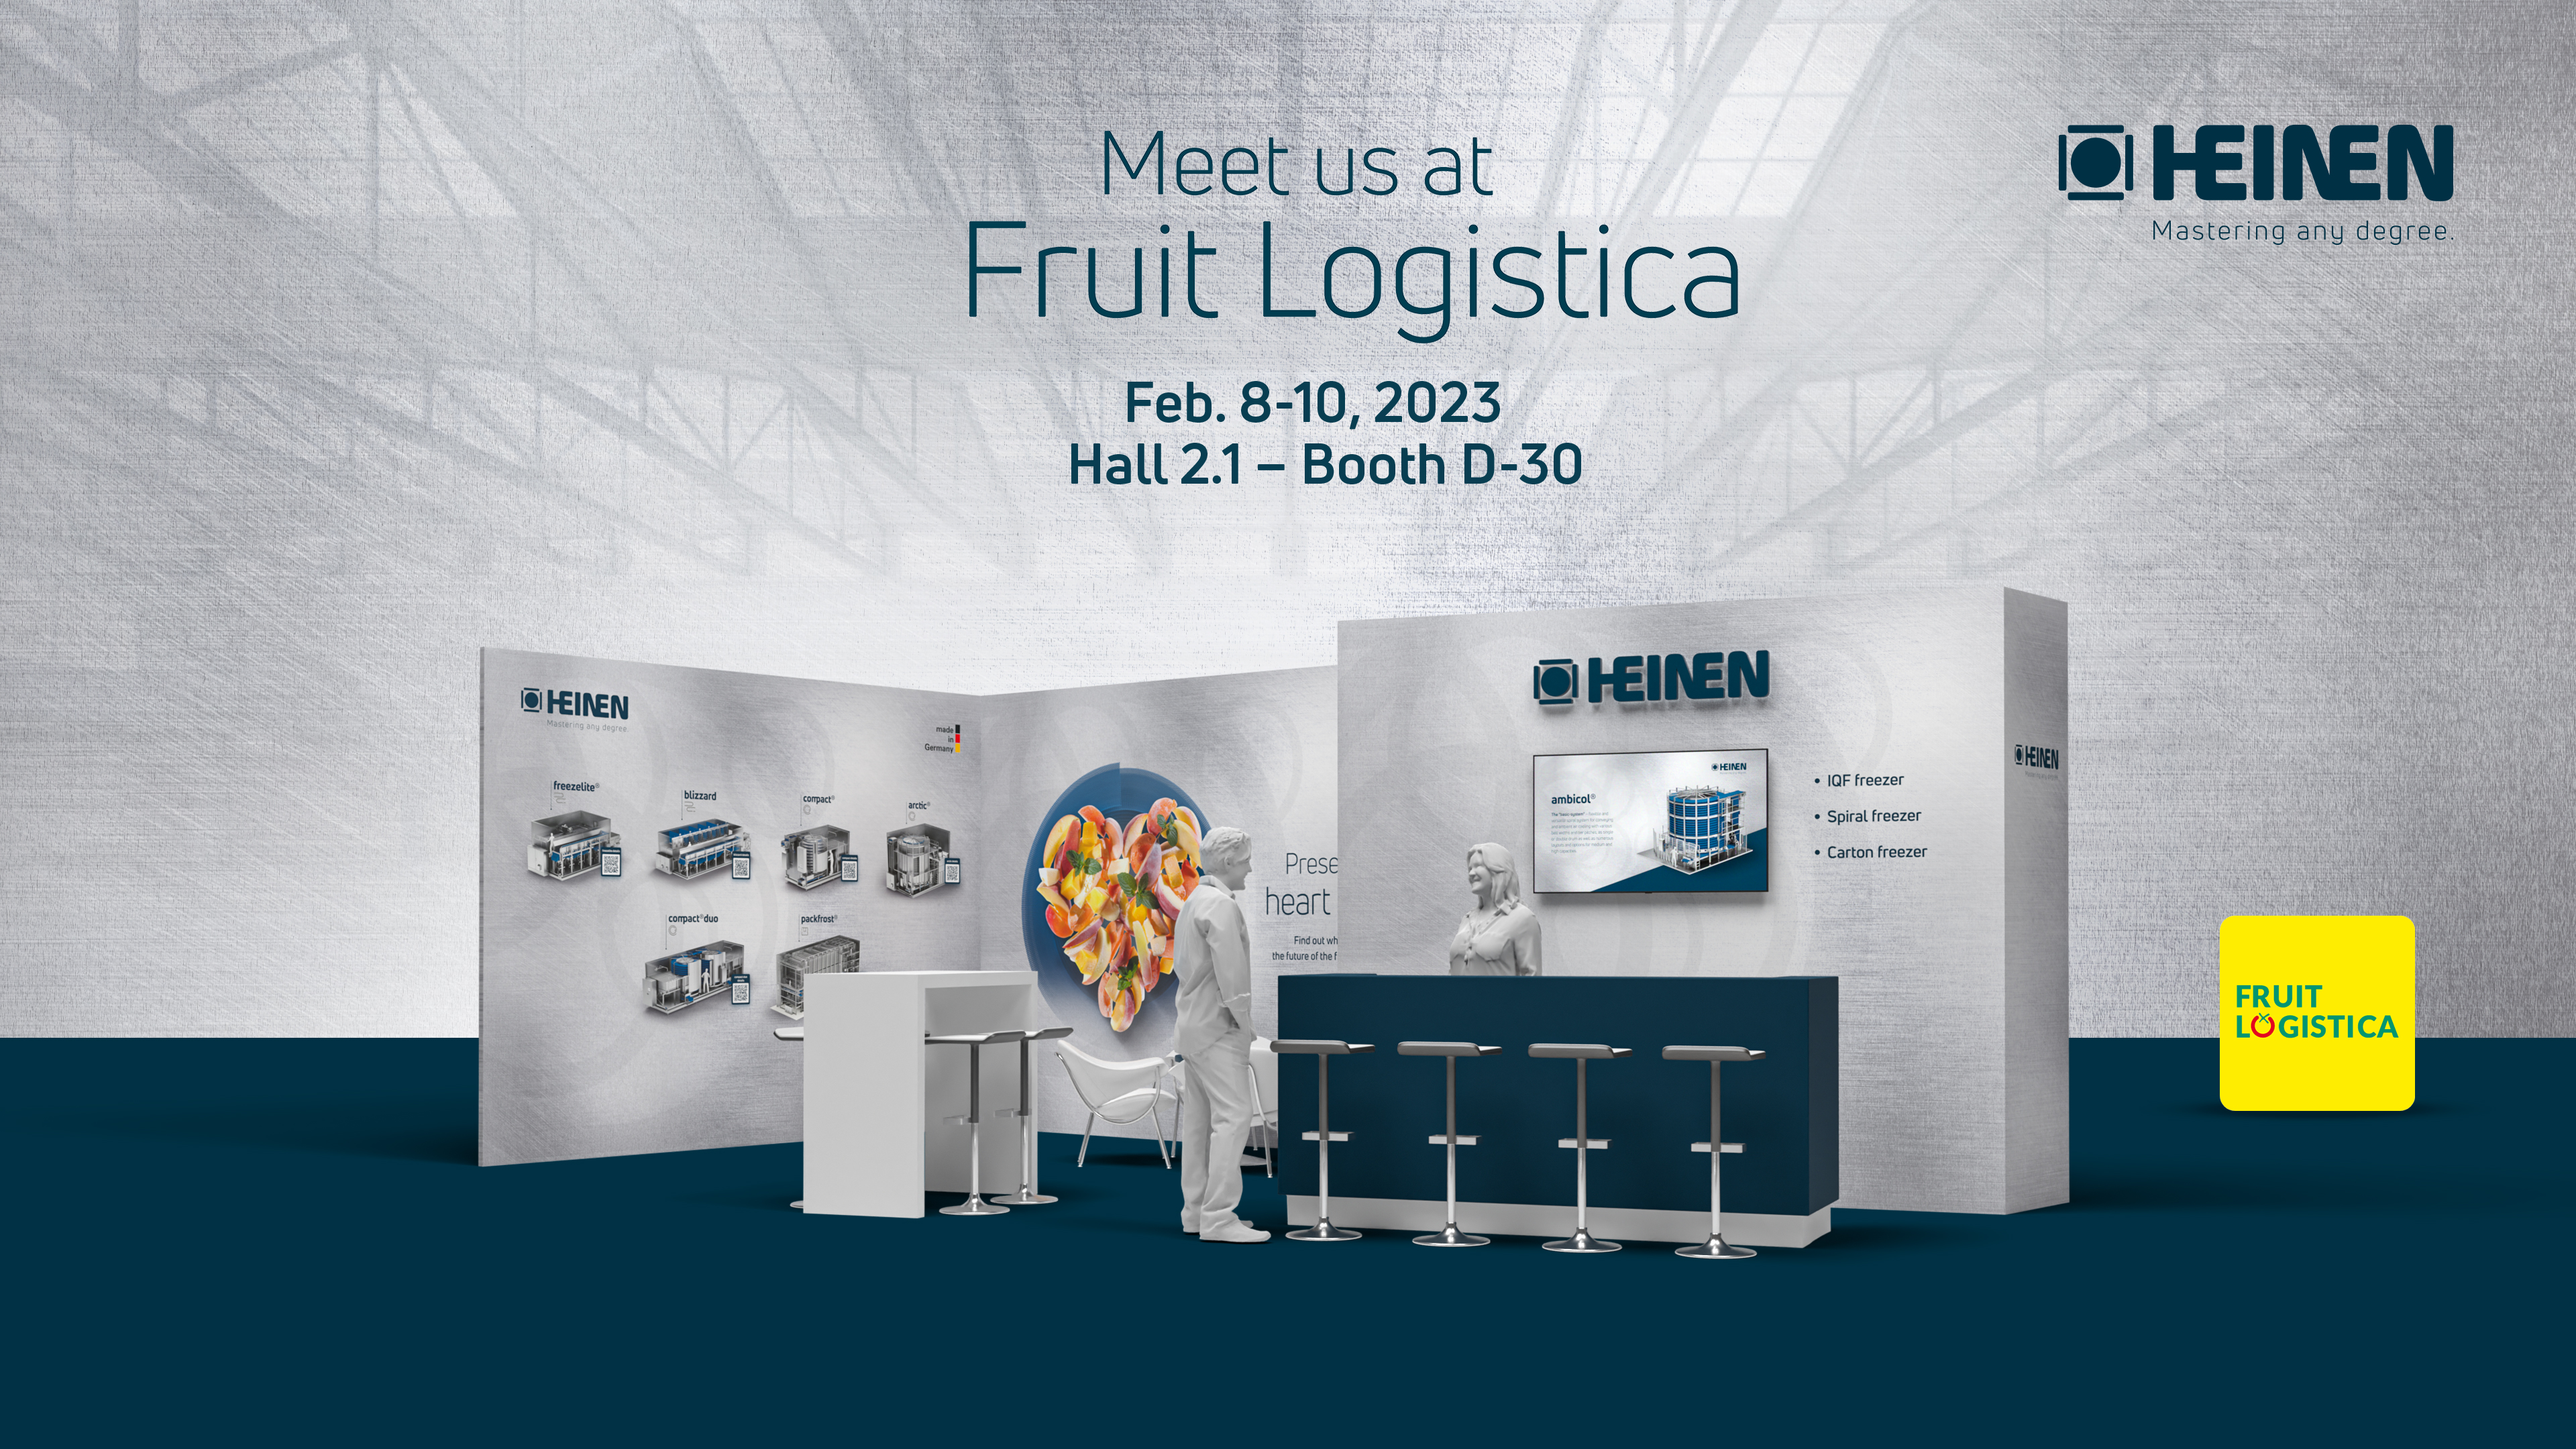 Let's meet: Fruit Logistica
2023 8th - 10th
Feb., 2023